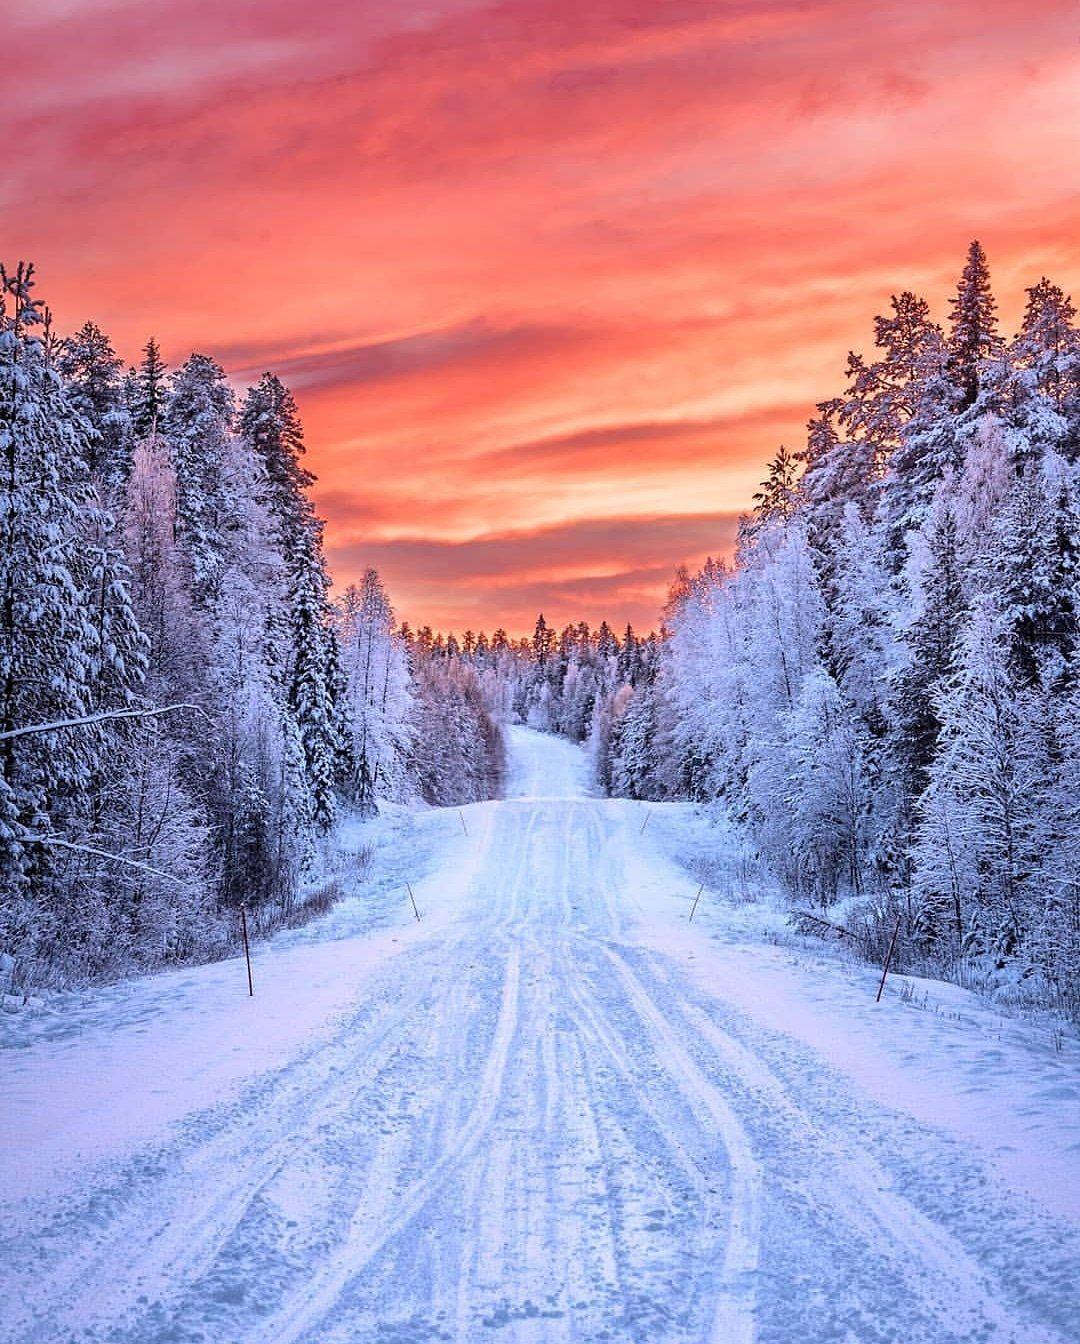 Road to the winter wonderland. #visitlapland #Finland #DriveSafe #WinterisHere